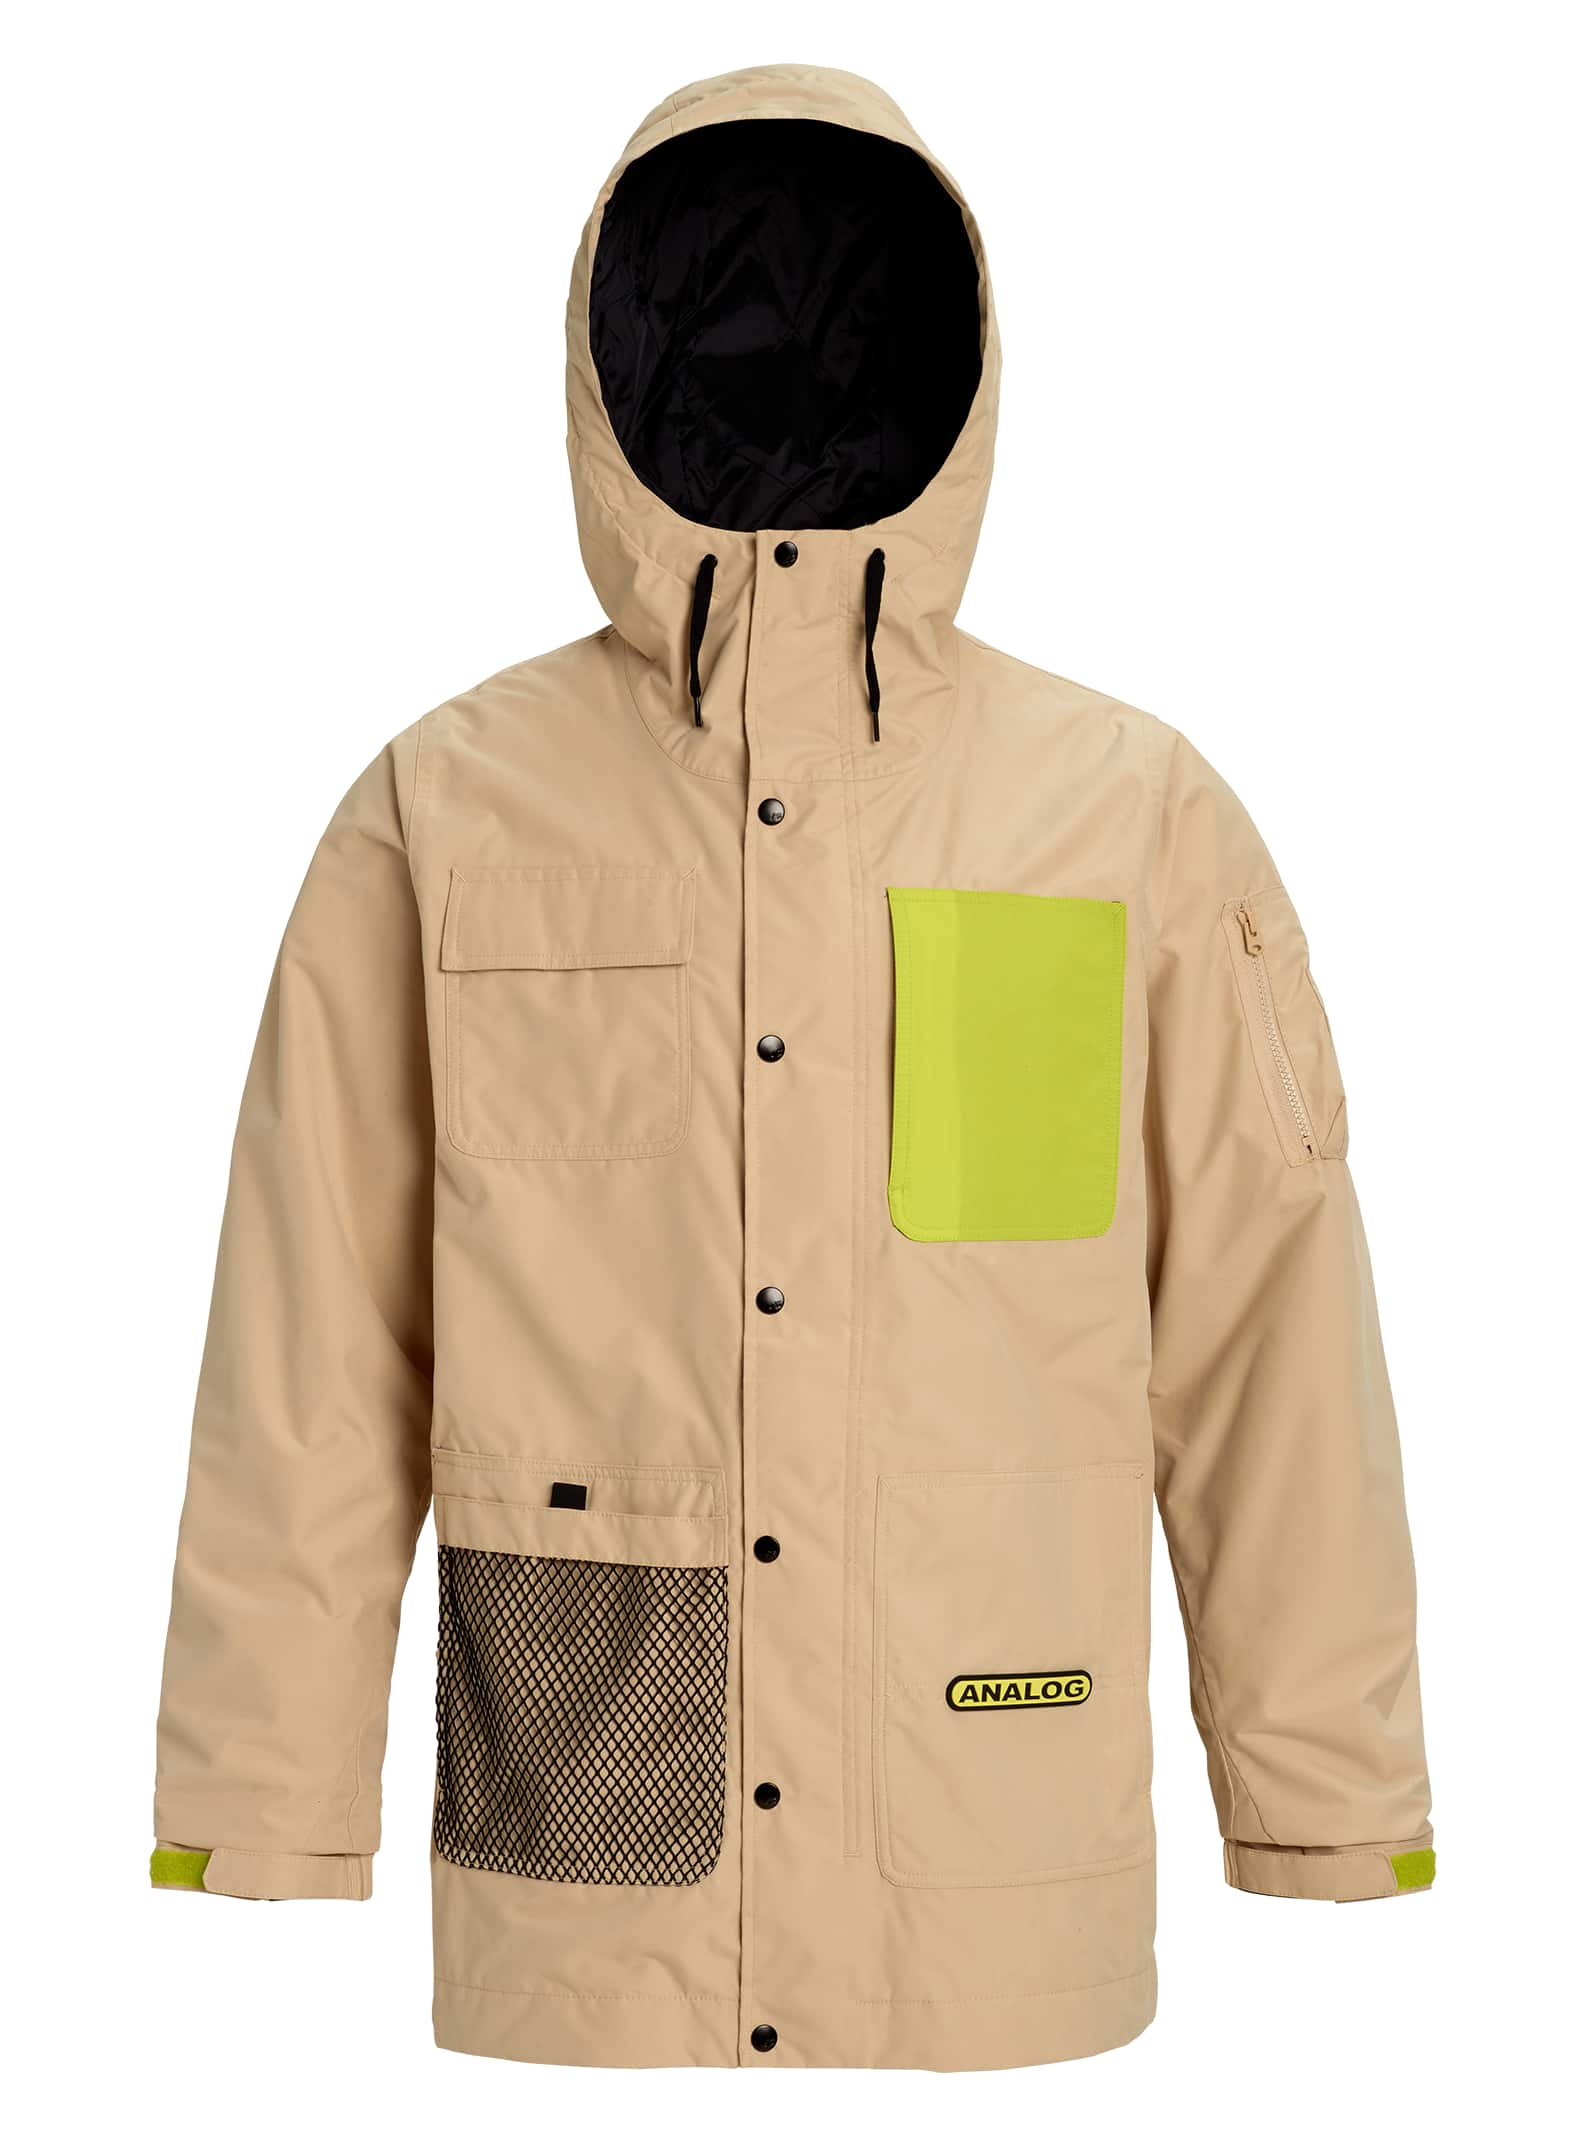 Burton Analog® Solitary Jacket | Burton.com Winter 2020 US